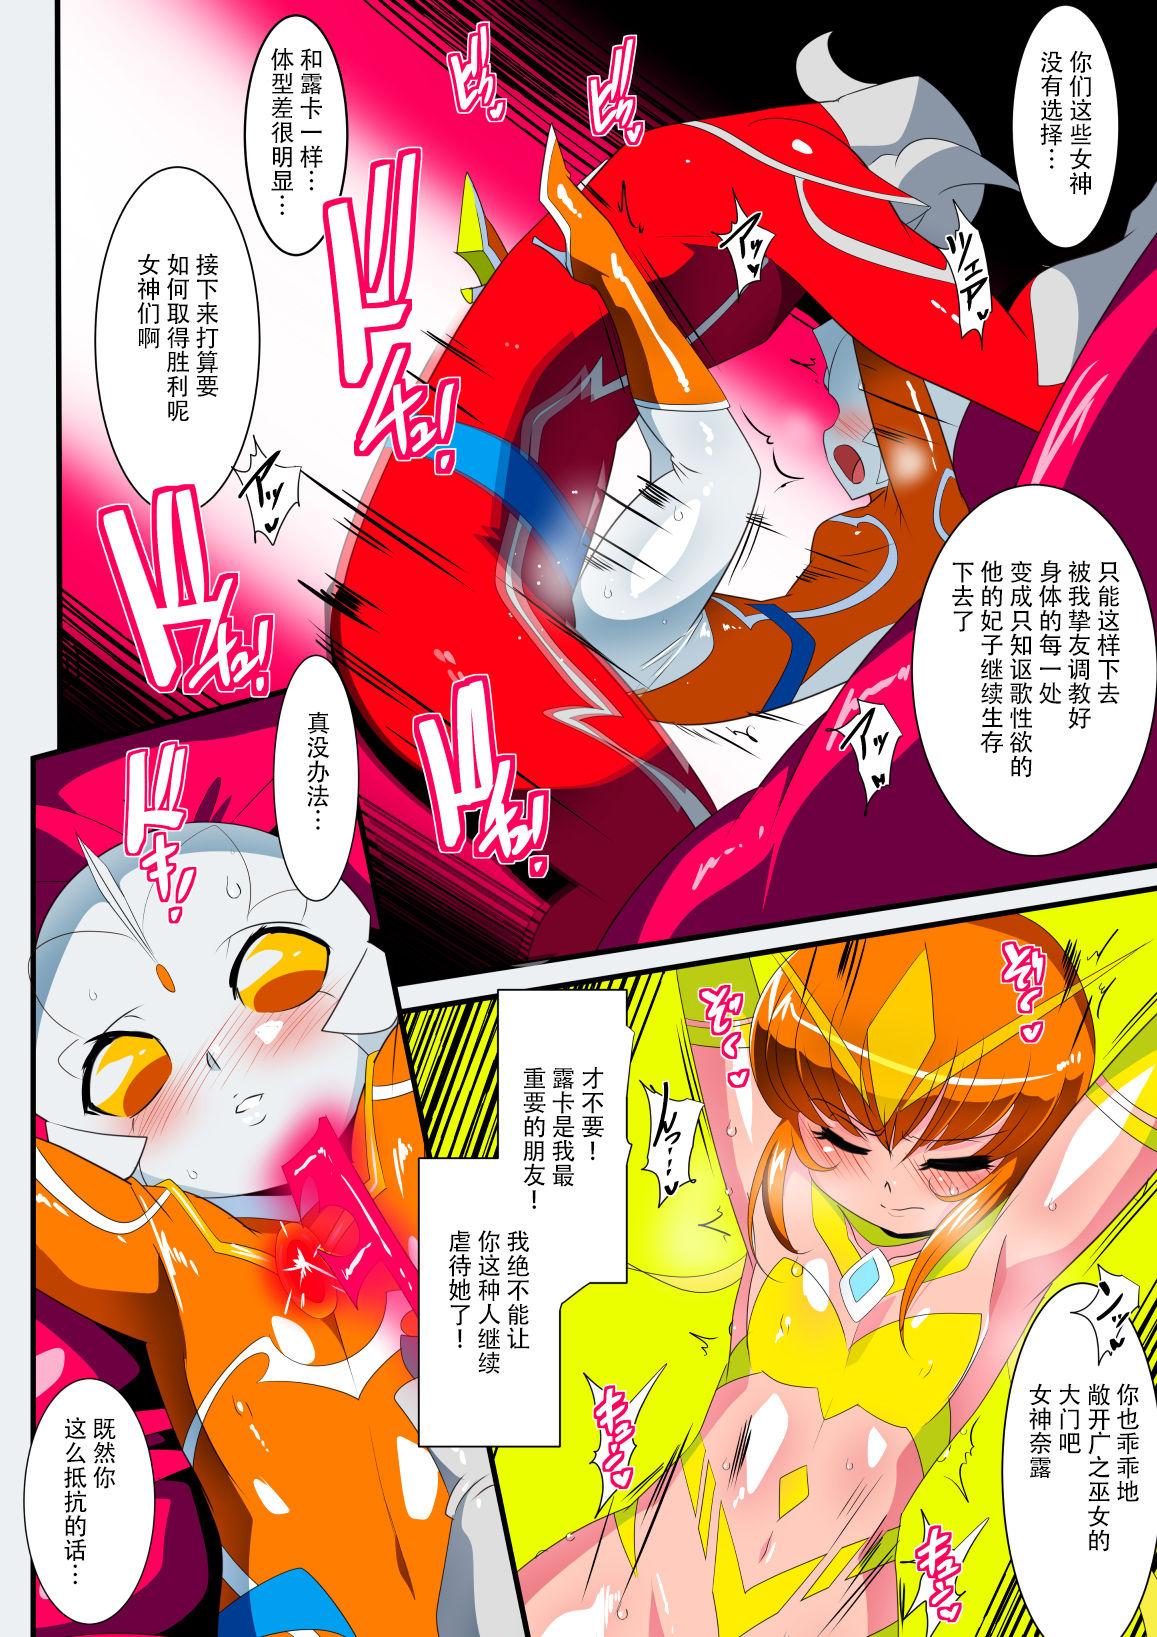 Blow Ginga no Megami Netise IX - Ultraman Guy - Page 6